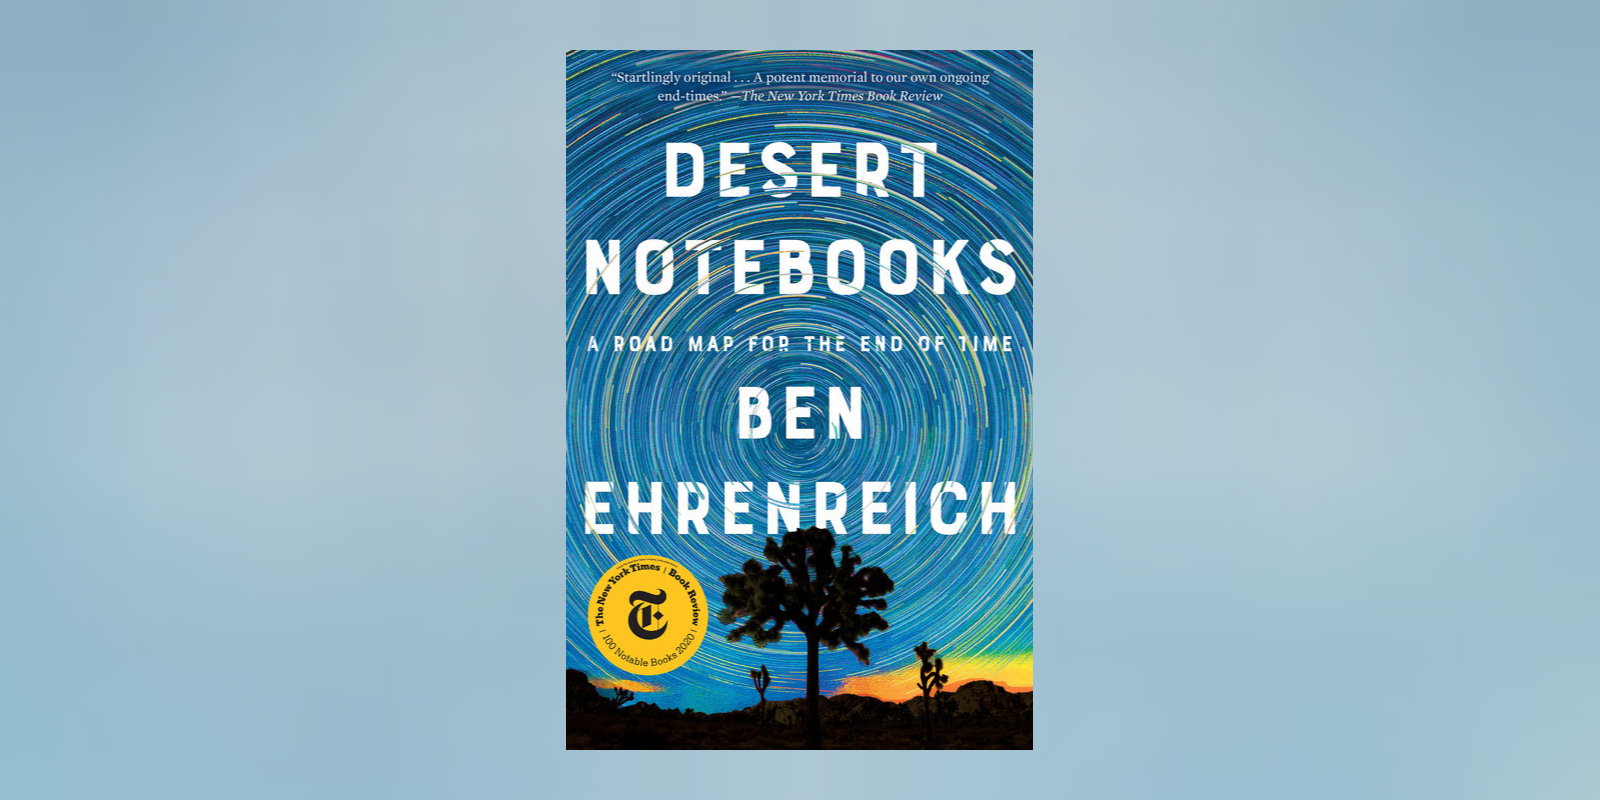 Ben Ehrenreich is awarded the American Book Award for <i>Desert Notebooks</i>